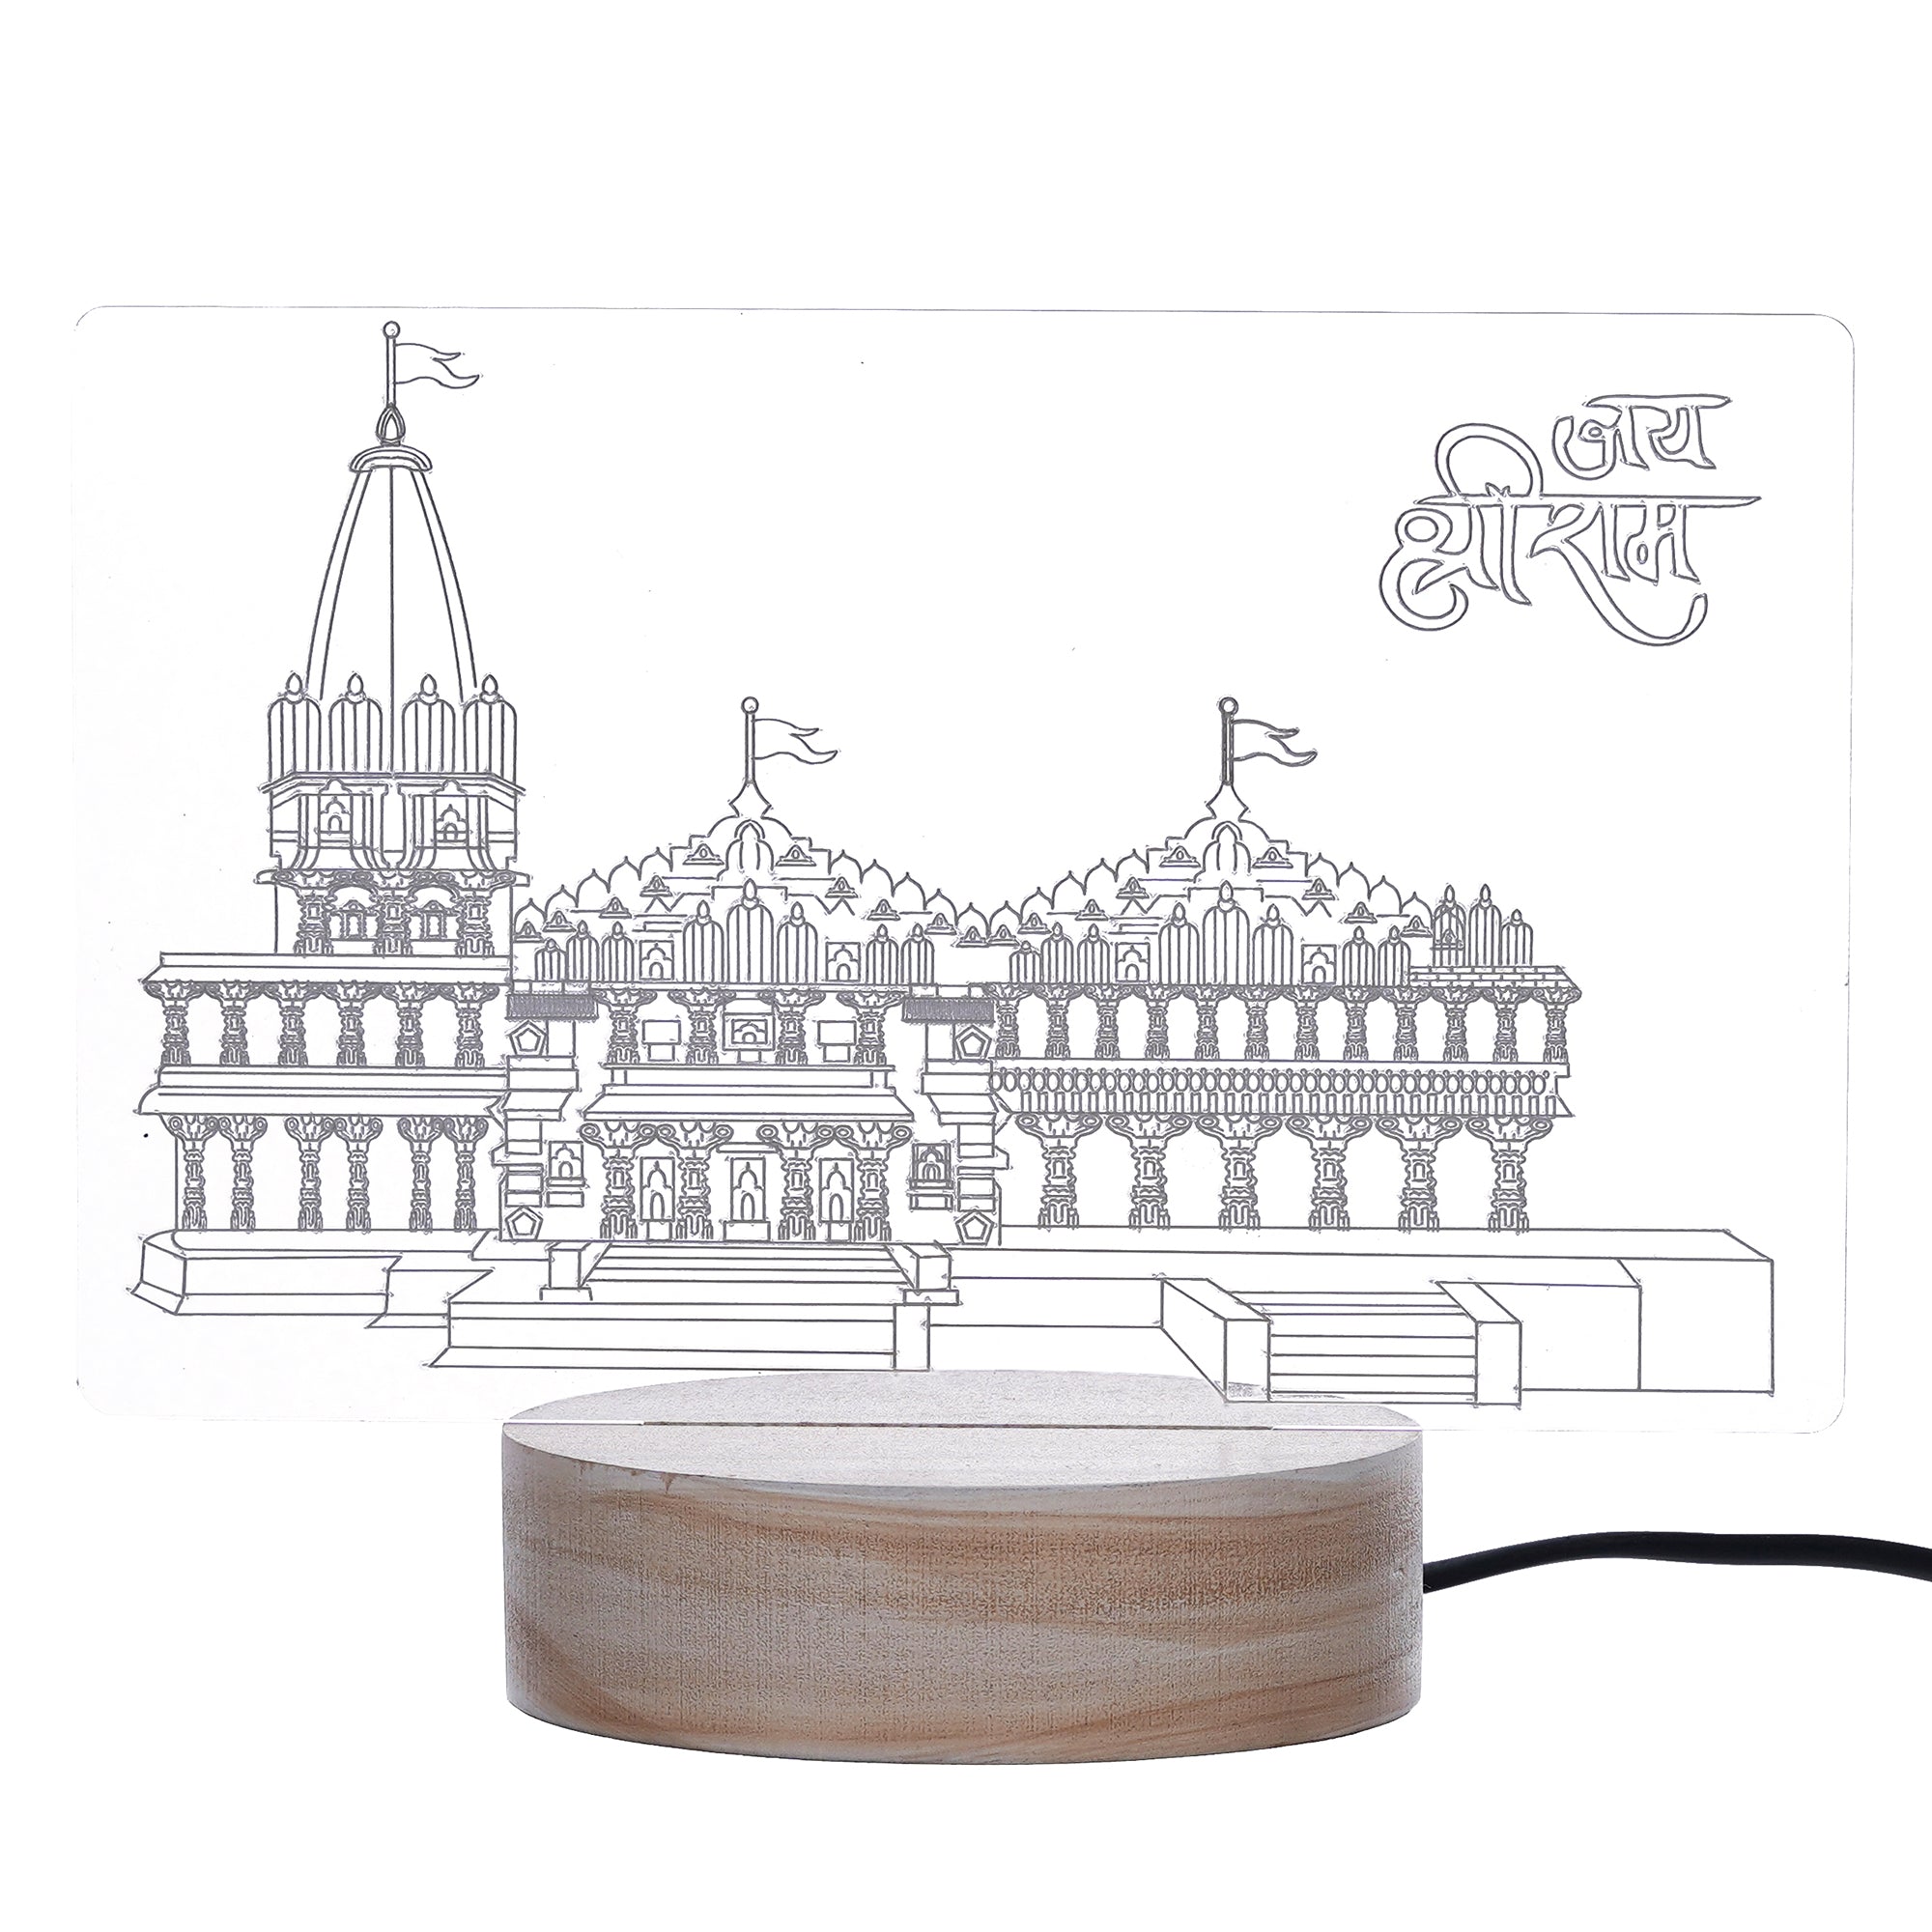 eCraftIndia Acrylic & Wood Base Shri Ram Mandir Ayodhya Temple Design Decorated Table Lamp for Home Temple, Decor, and Spiritual Gifting 2